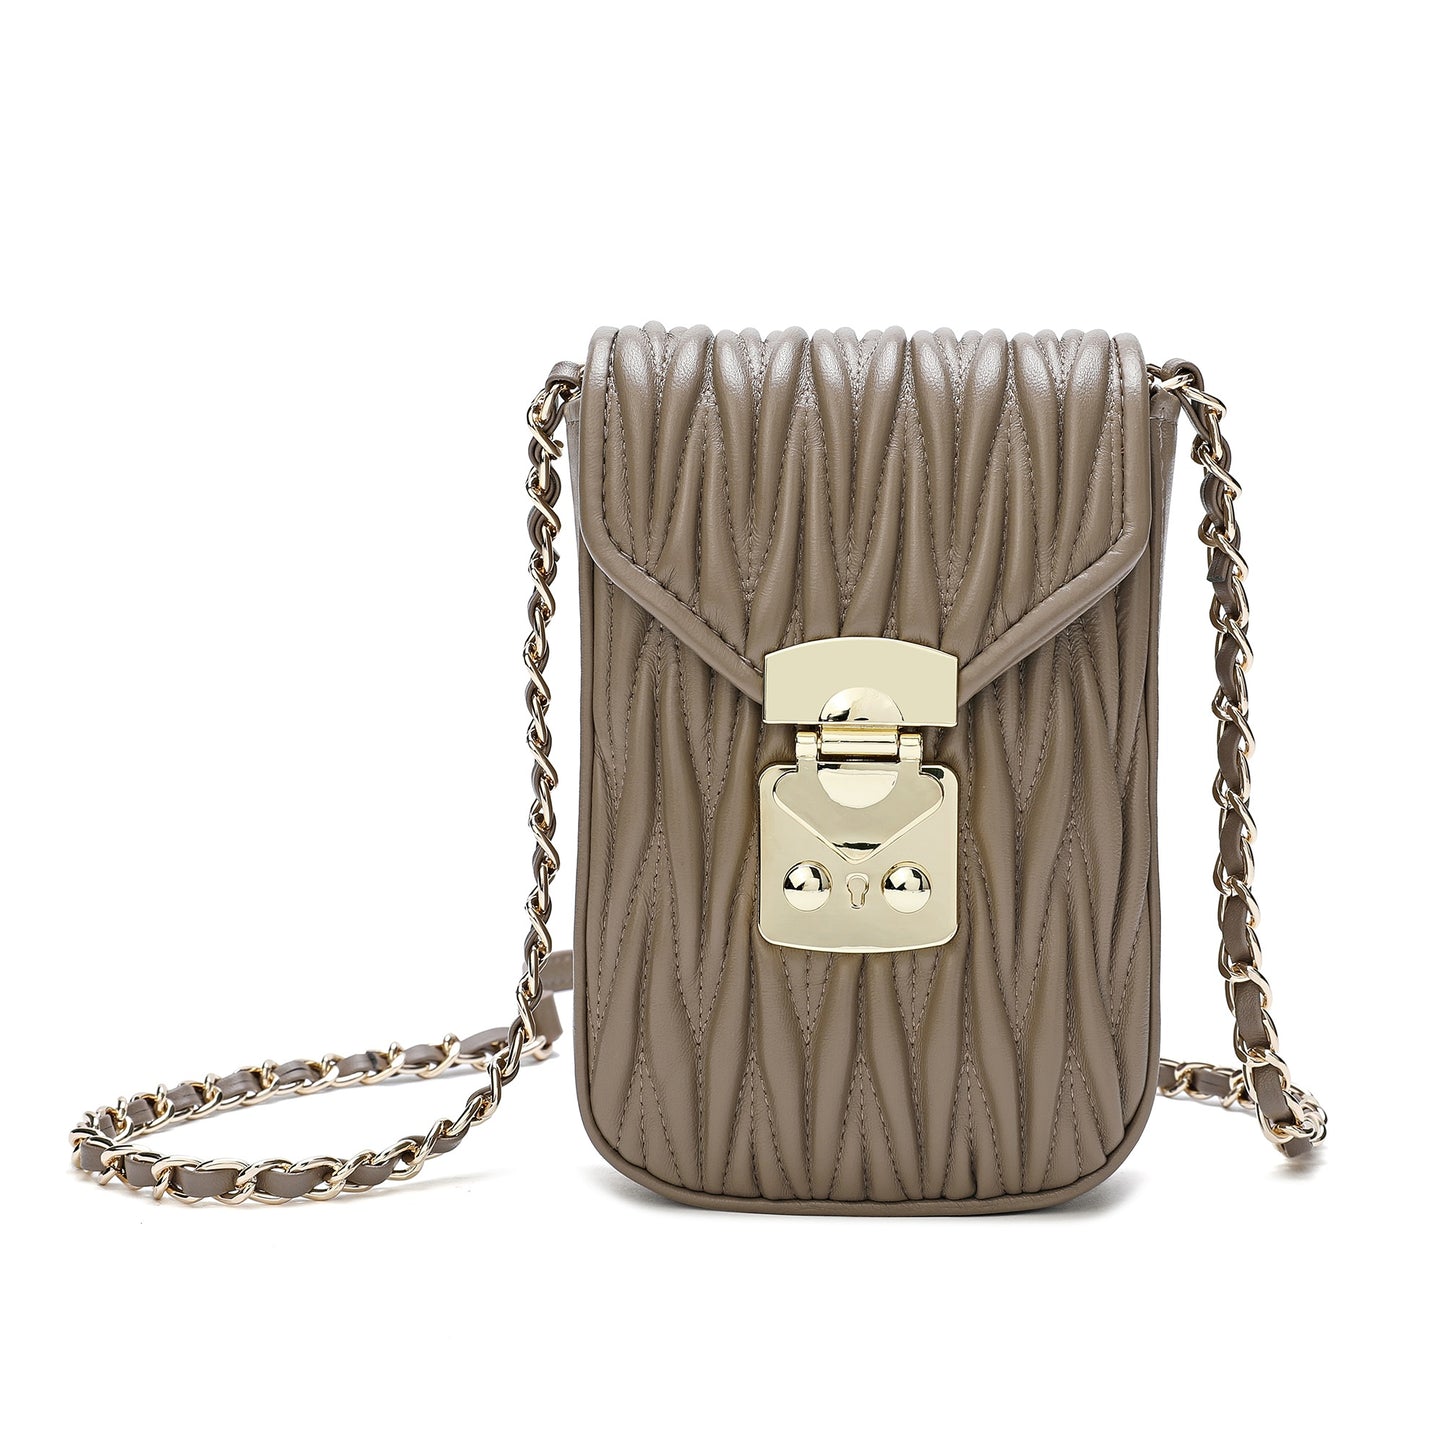 Tiffany & Fred Sheepskin Leather Phone Bag